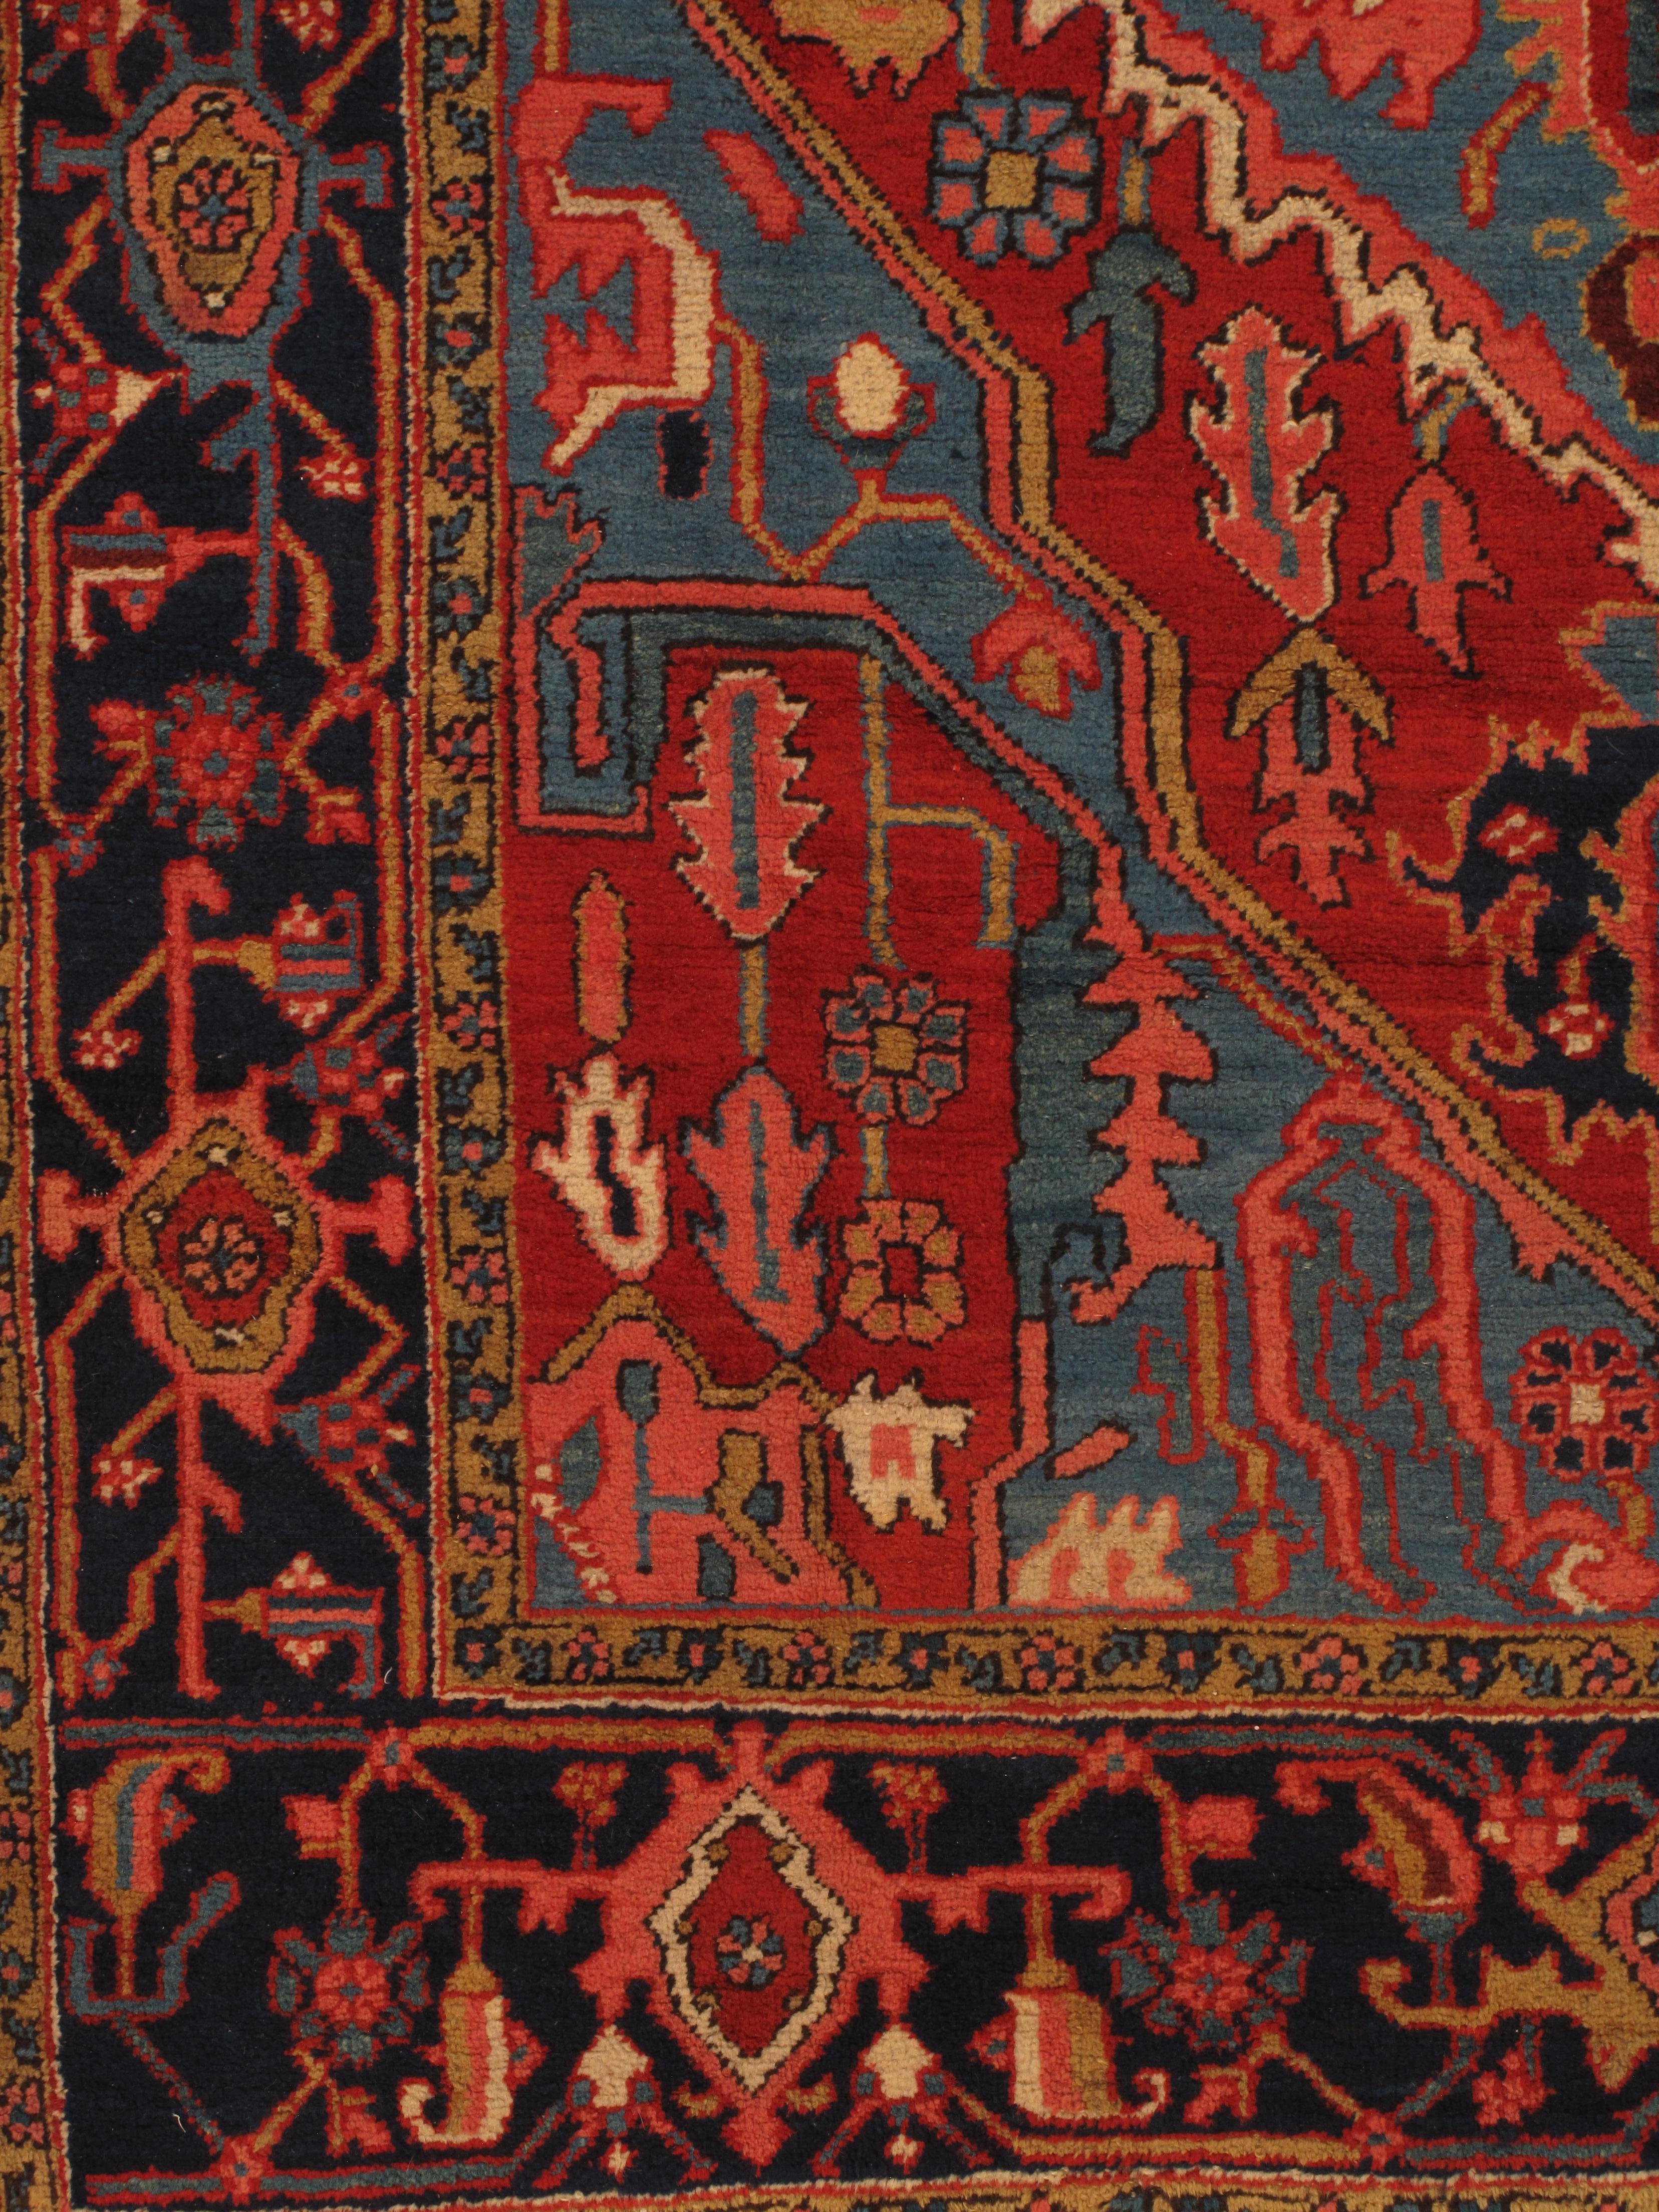 20th Century Antique Persian Serapi Carpet Handmade Wool Oriental Rug, Red, Ivory, Light Blue For Sale